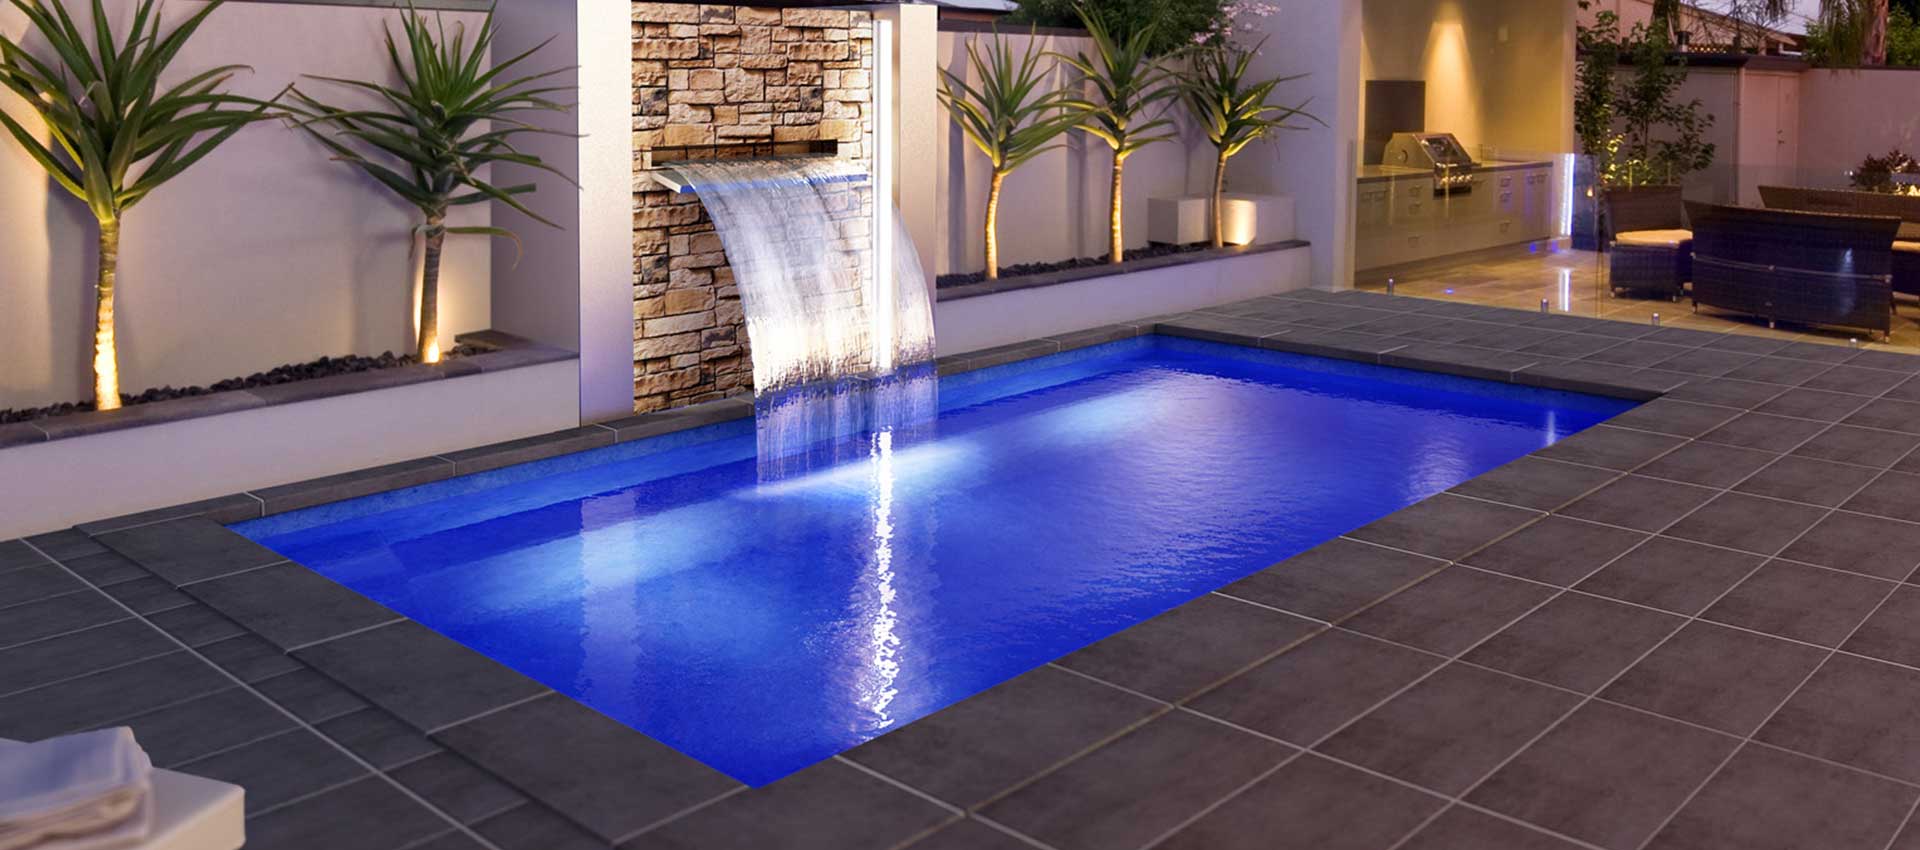 Entertainer 6.5m is a sleek rectangular pool designed